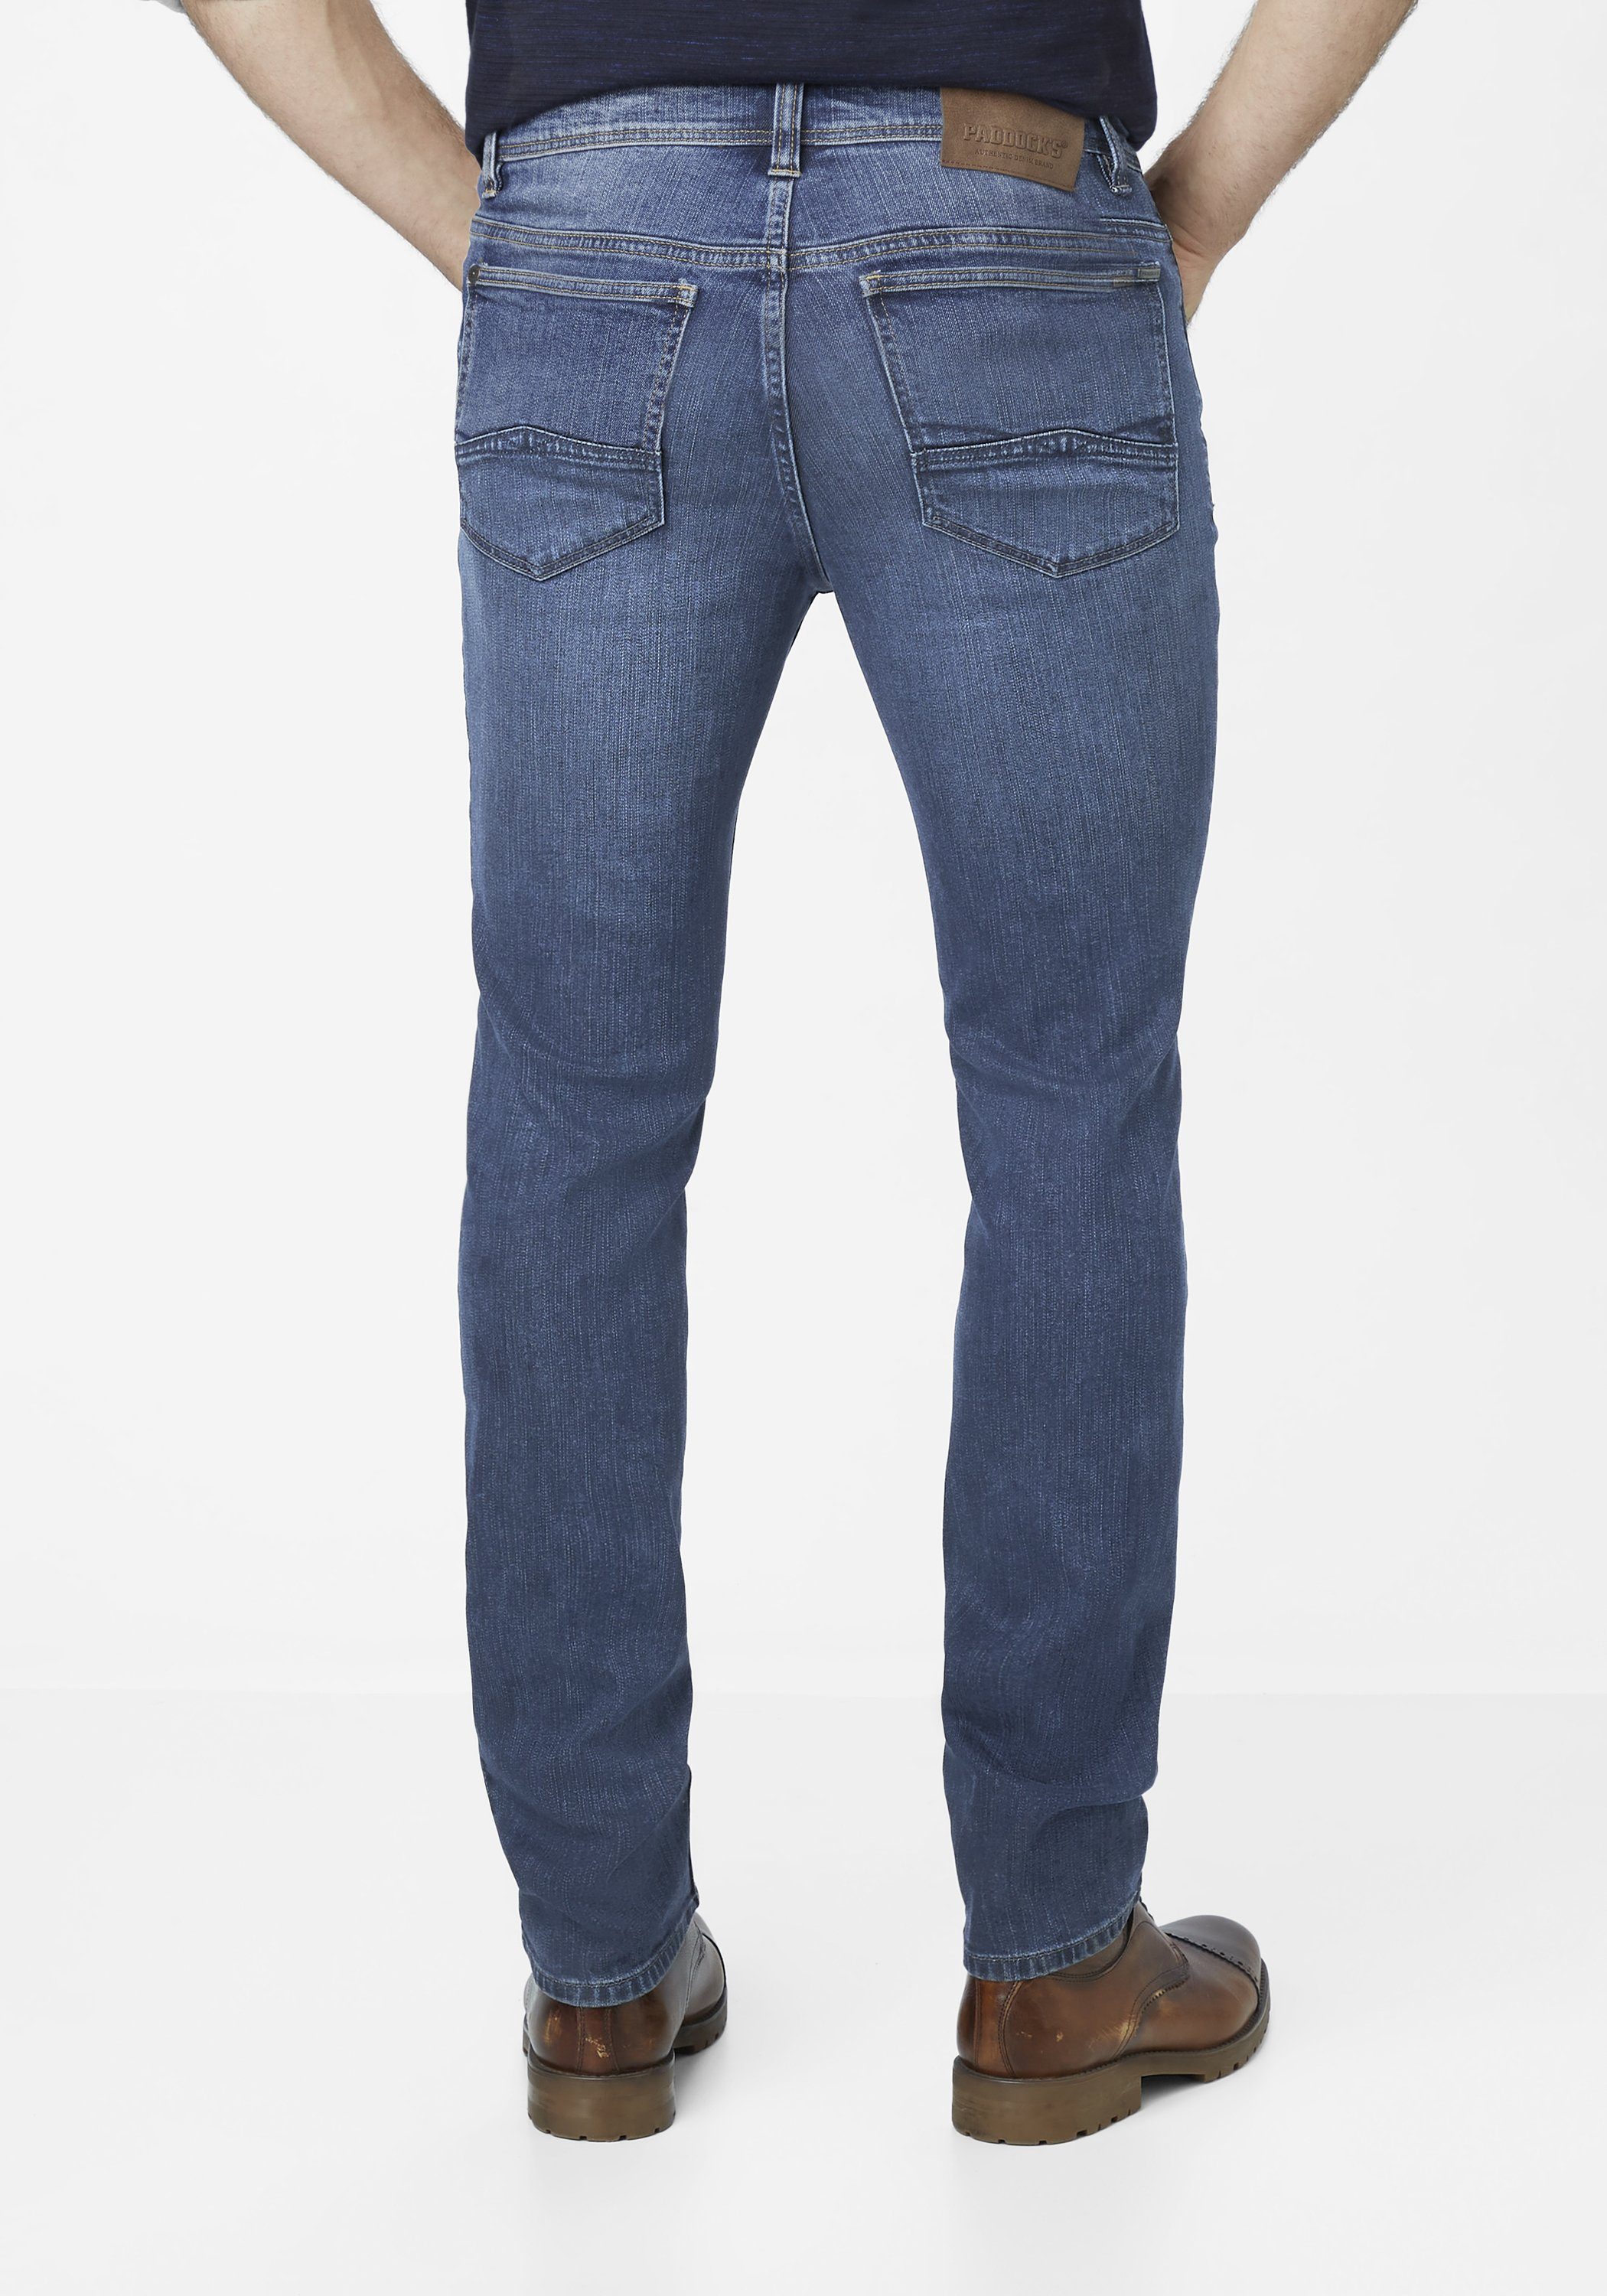 & Optimale exzellenter PIPE Jeans 5-Pocket mit Paddock\'s Comfort Stretch, Slim-fit-Jeans und Tragekomfort Passform Motion